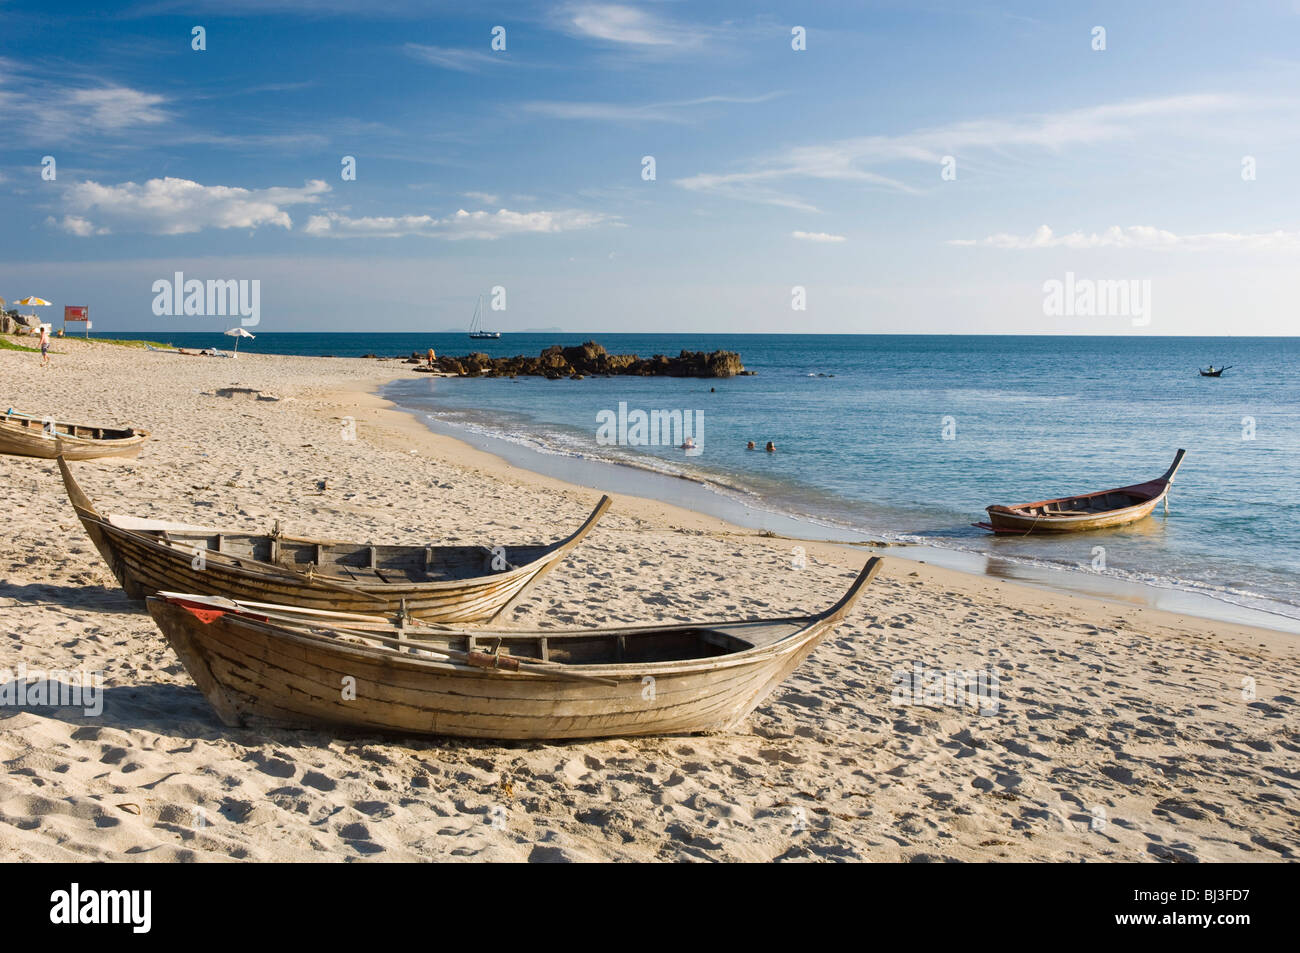 Fishing boats on the sandy beach, Klong Nin Beach, Ko Lanta or Koh Lanta island, Krabi, Thailand, Asia Stock Photo